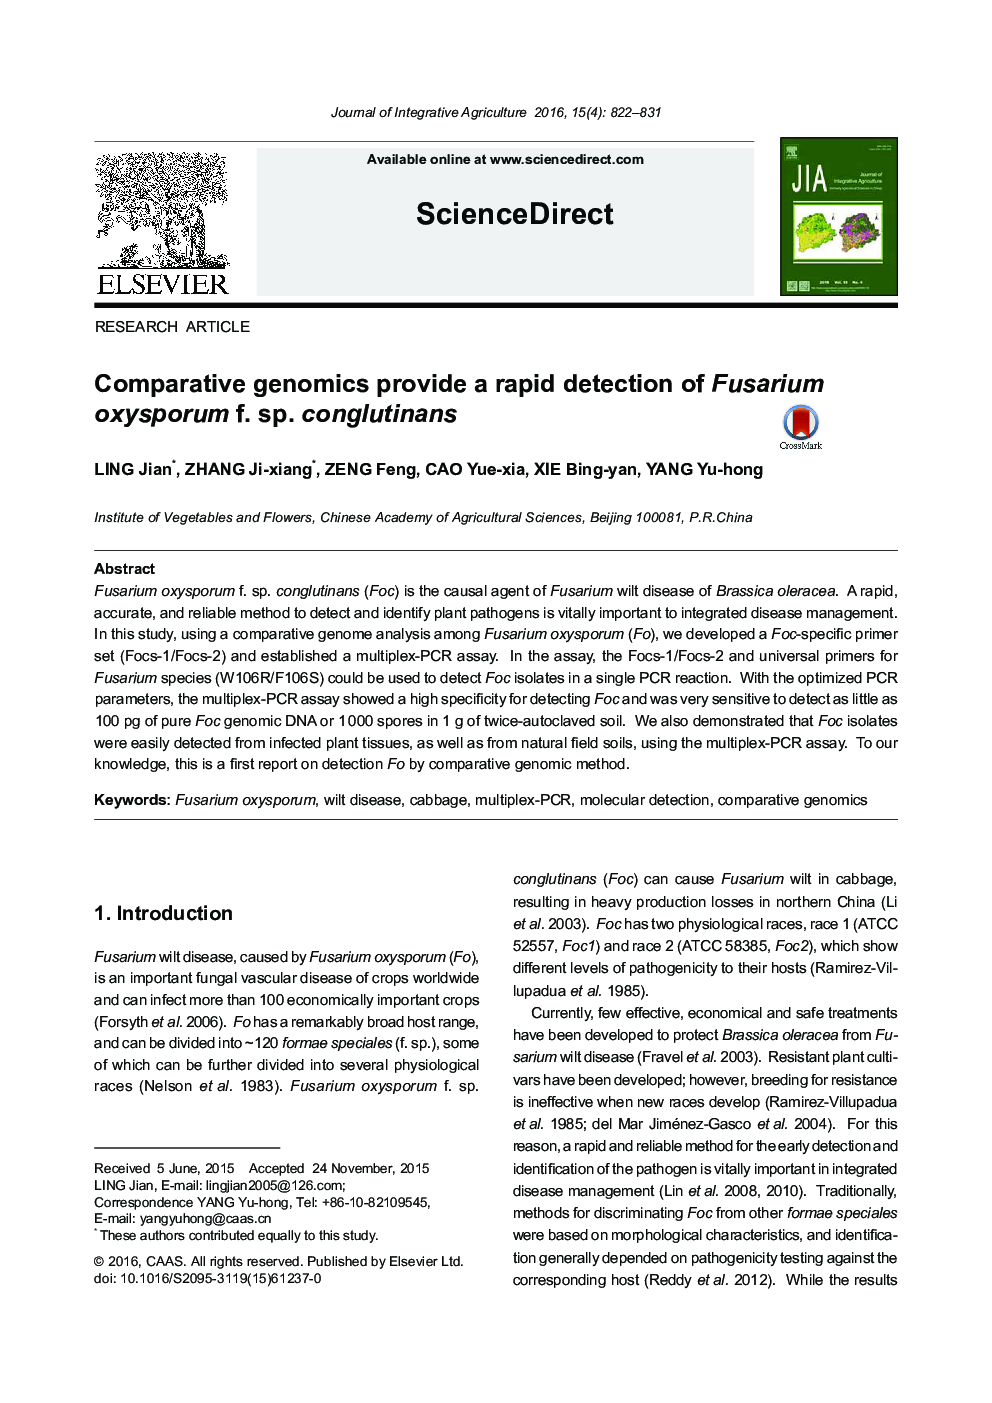 Comparative genomics provide a rapid detection of Fusarium oxysporum f. sp. conglutinans